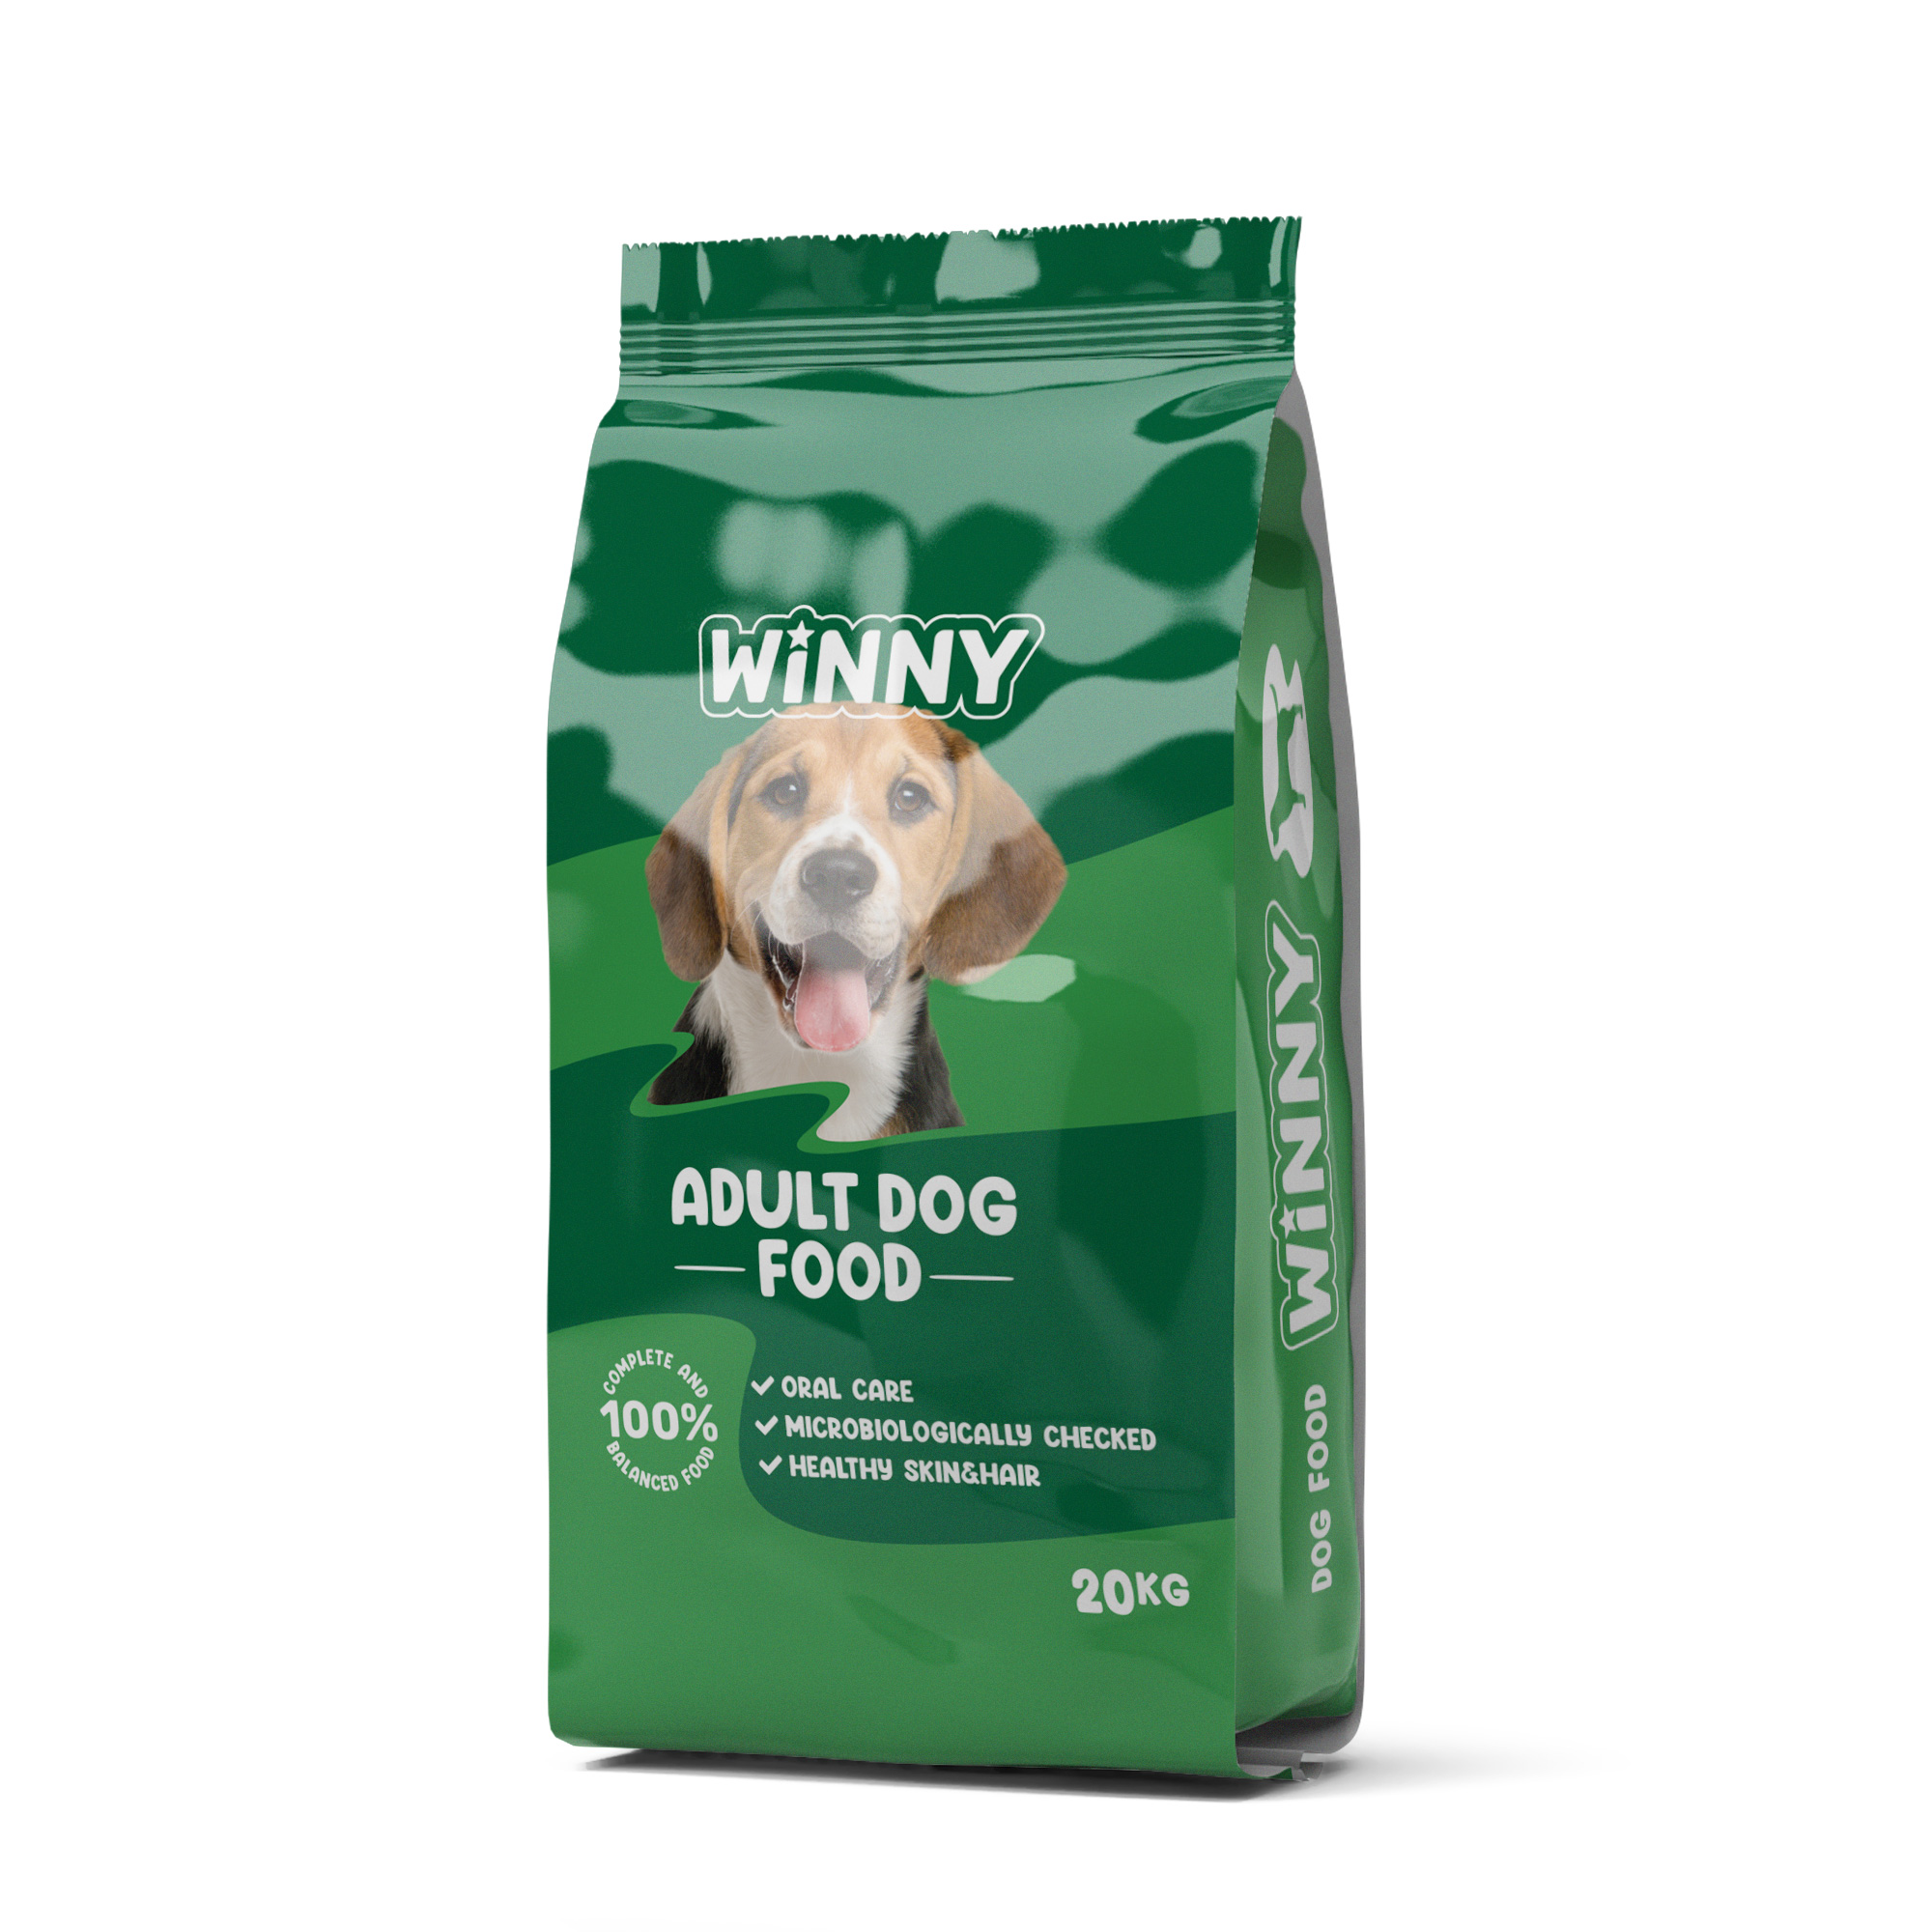 Winny - Adult Dog Food - 20 kg